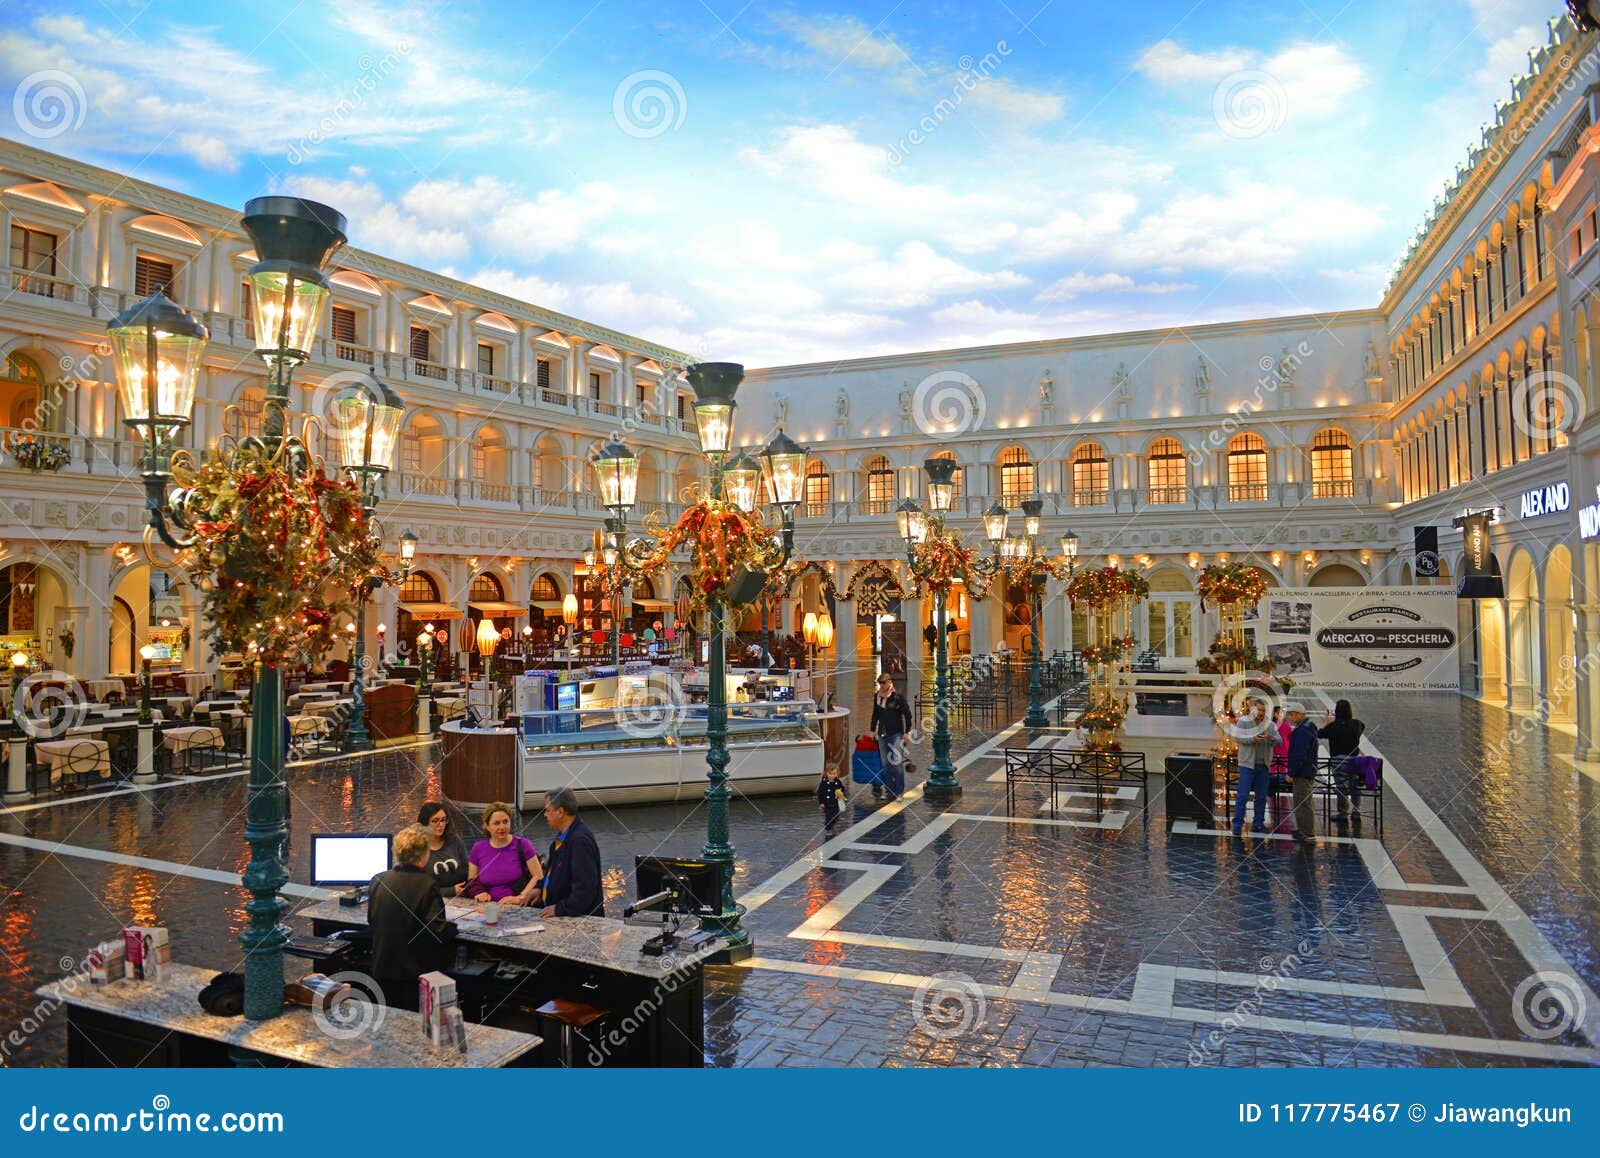 The Venetian in Las Vegas, Nevada